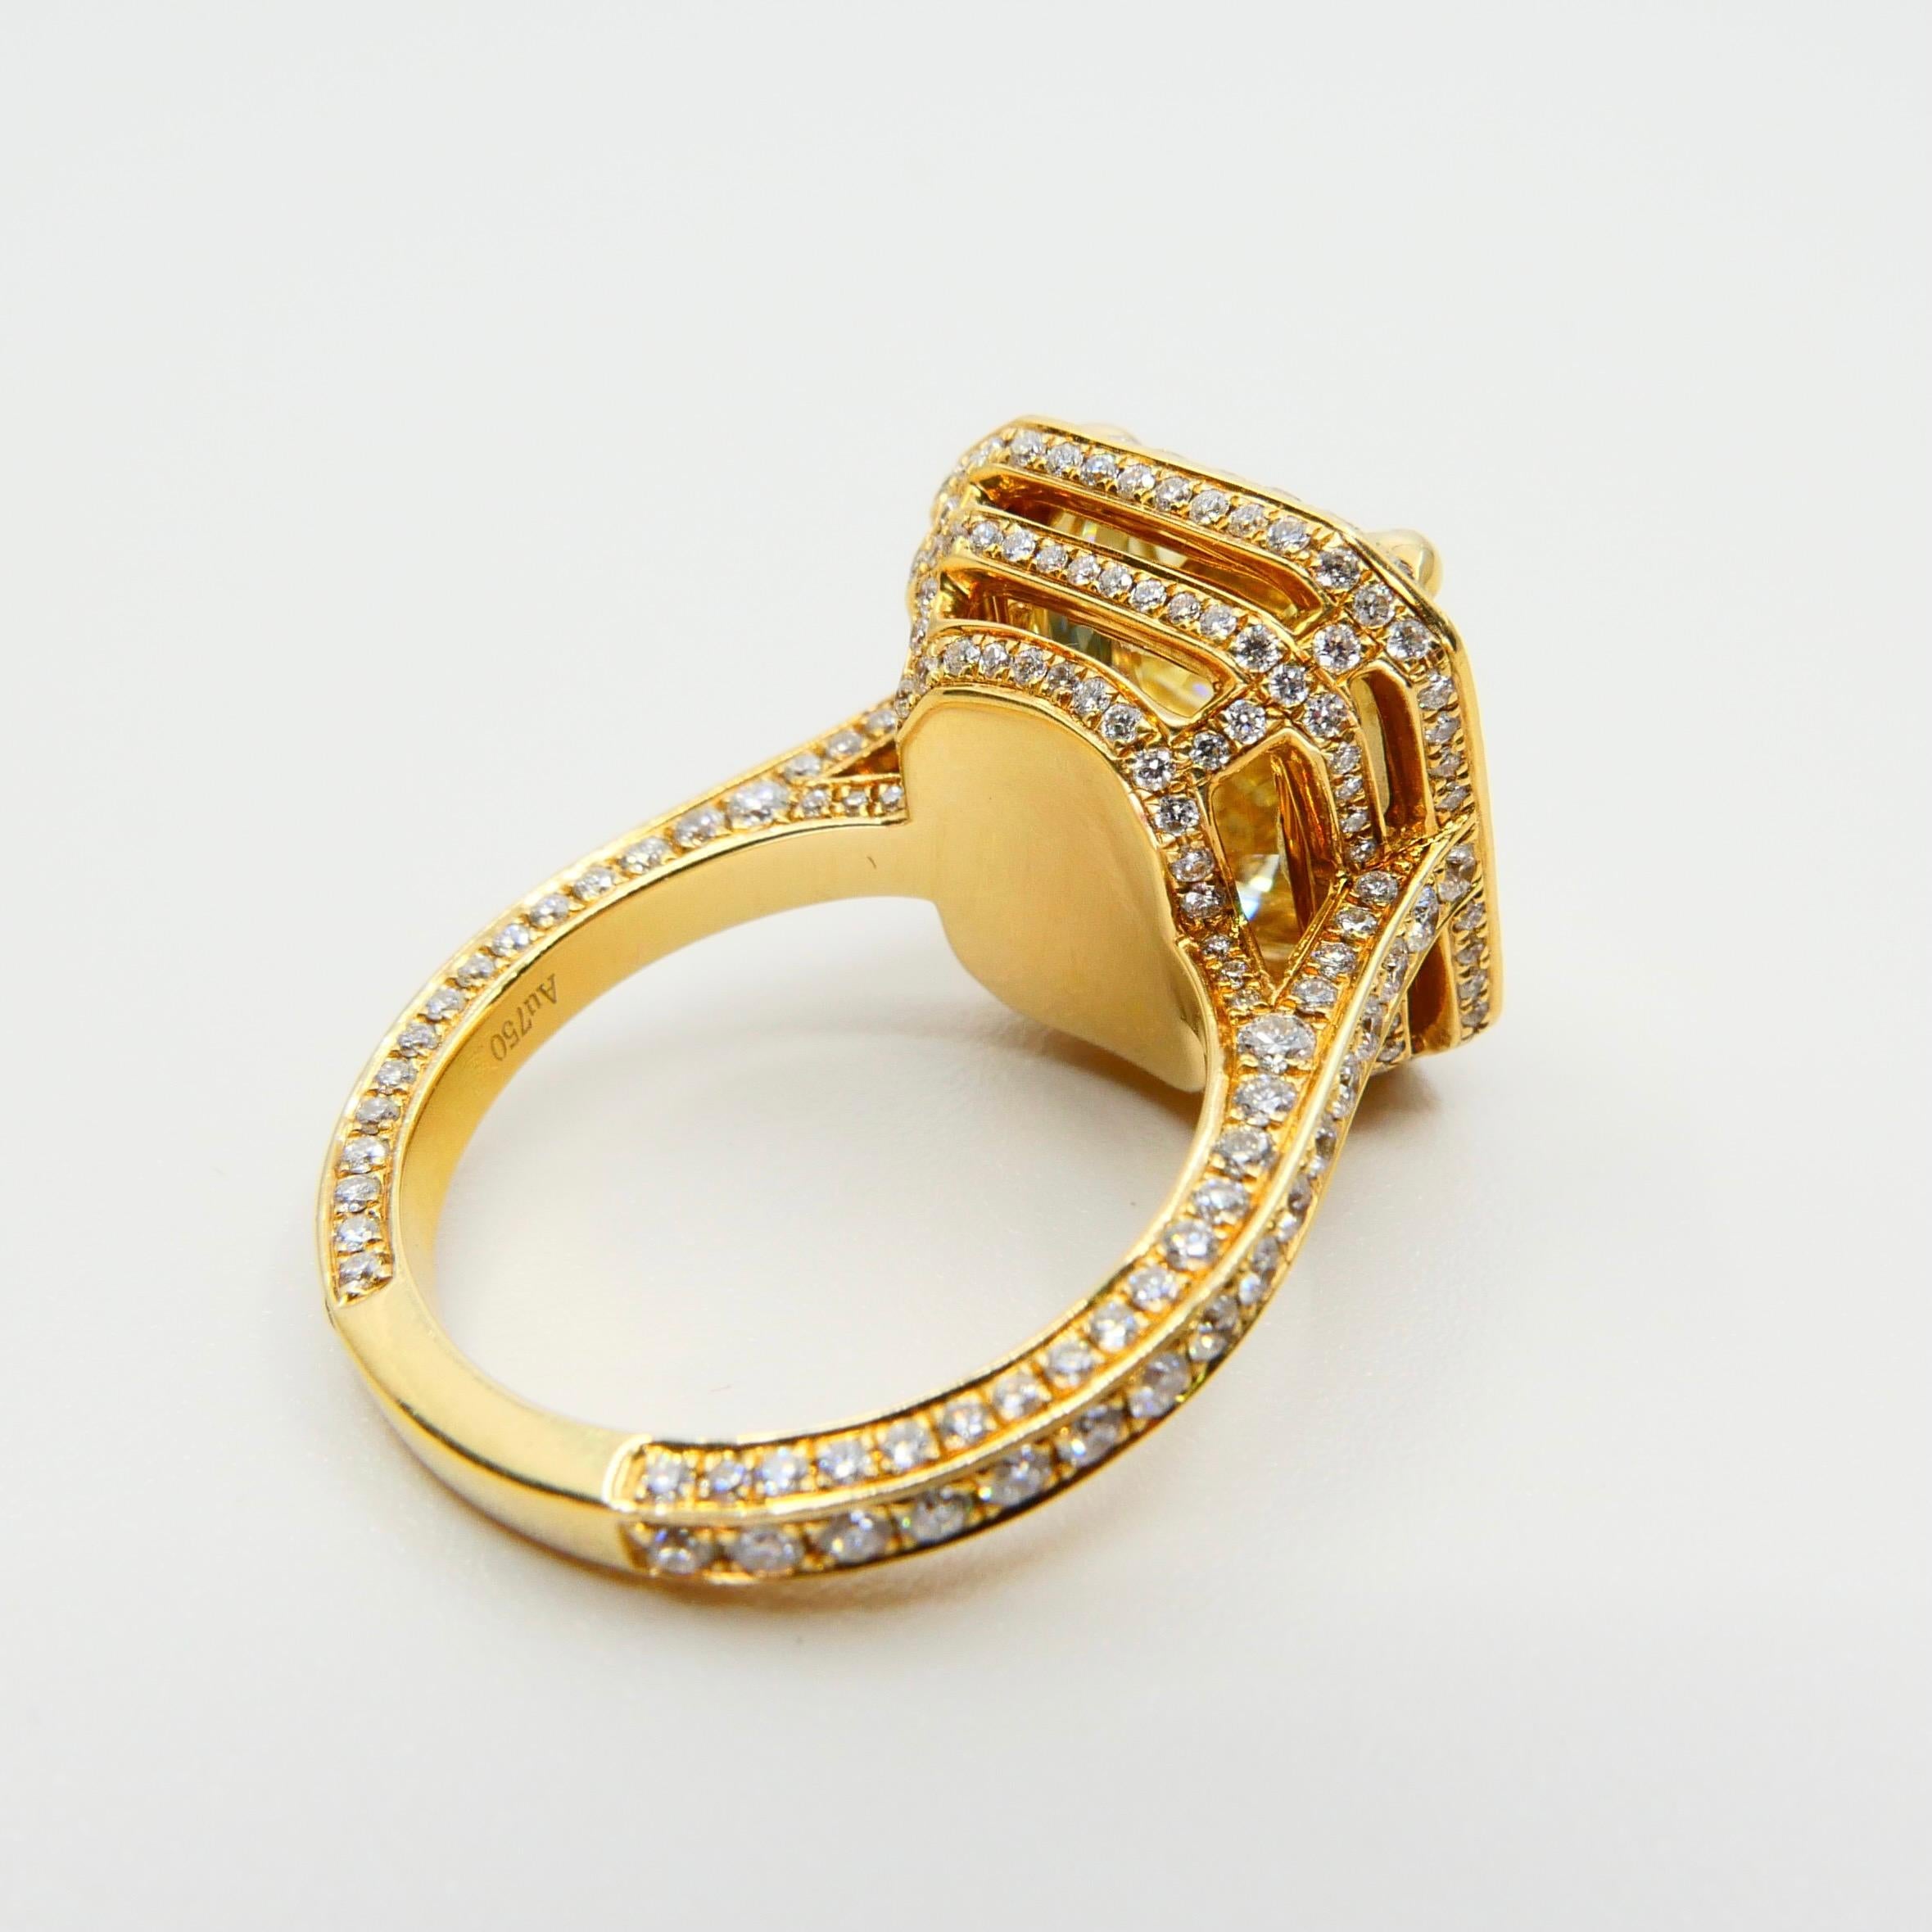 Radiant Cut GIA Certified 9 Carat Yellow Diamond Engagement Ring, Oversized & Eye Clean